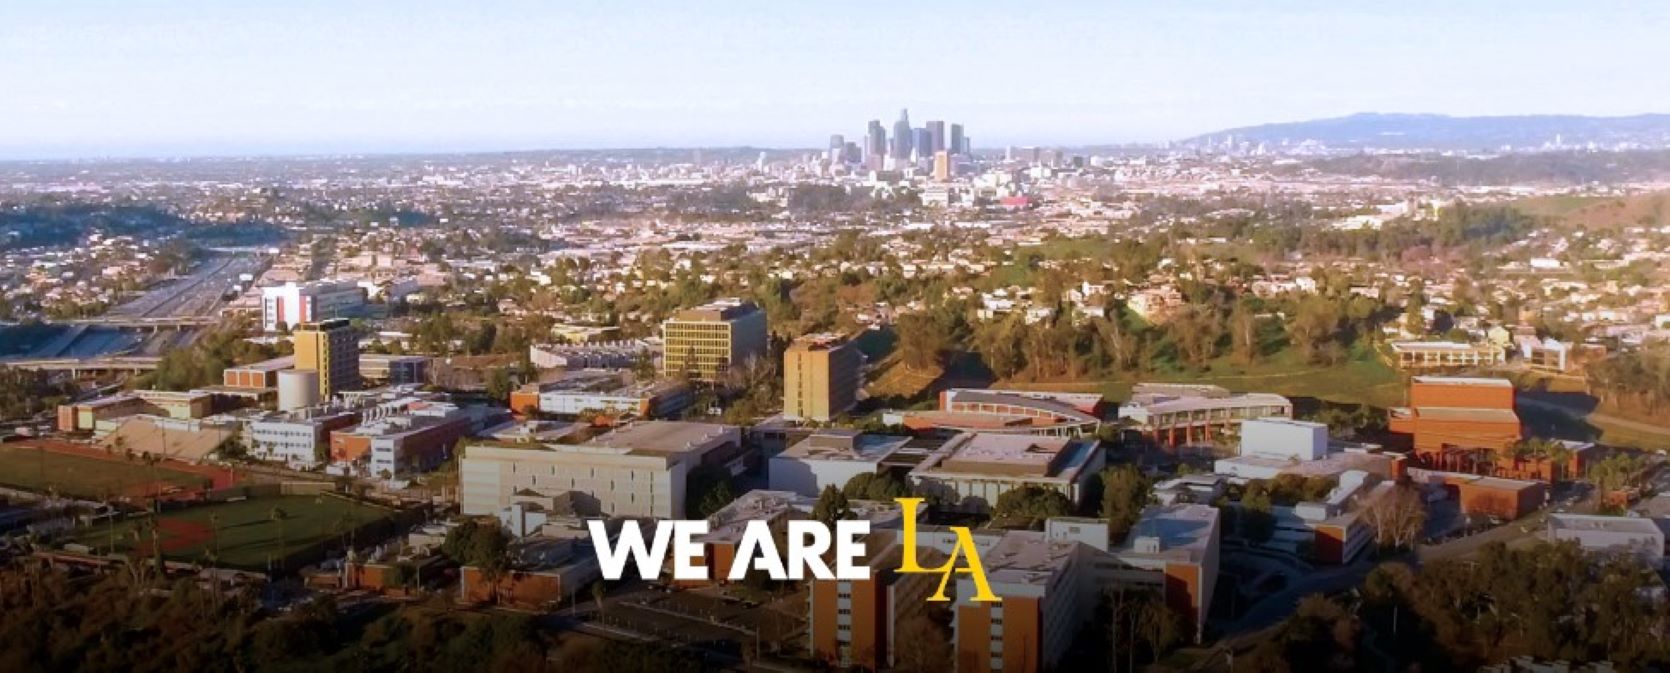 Picture of Cal State LA campus and campus motto, "We Are LA"